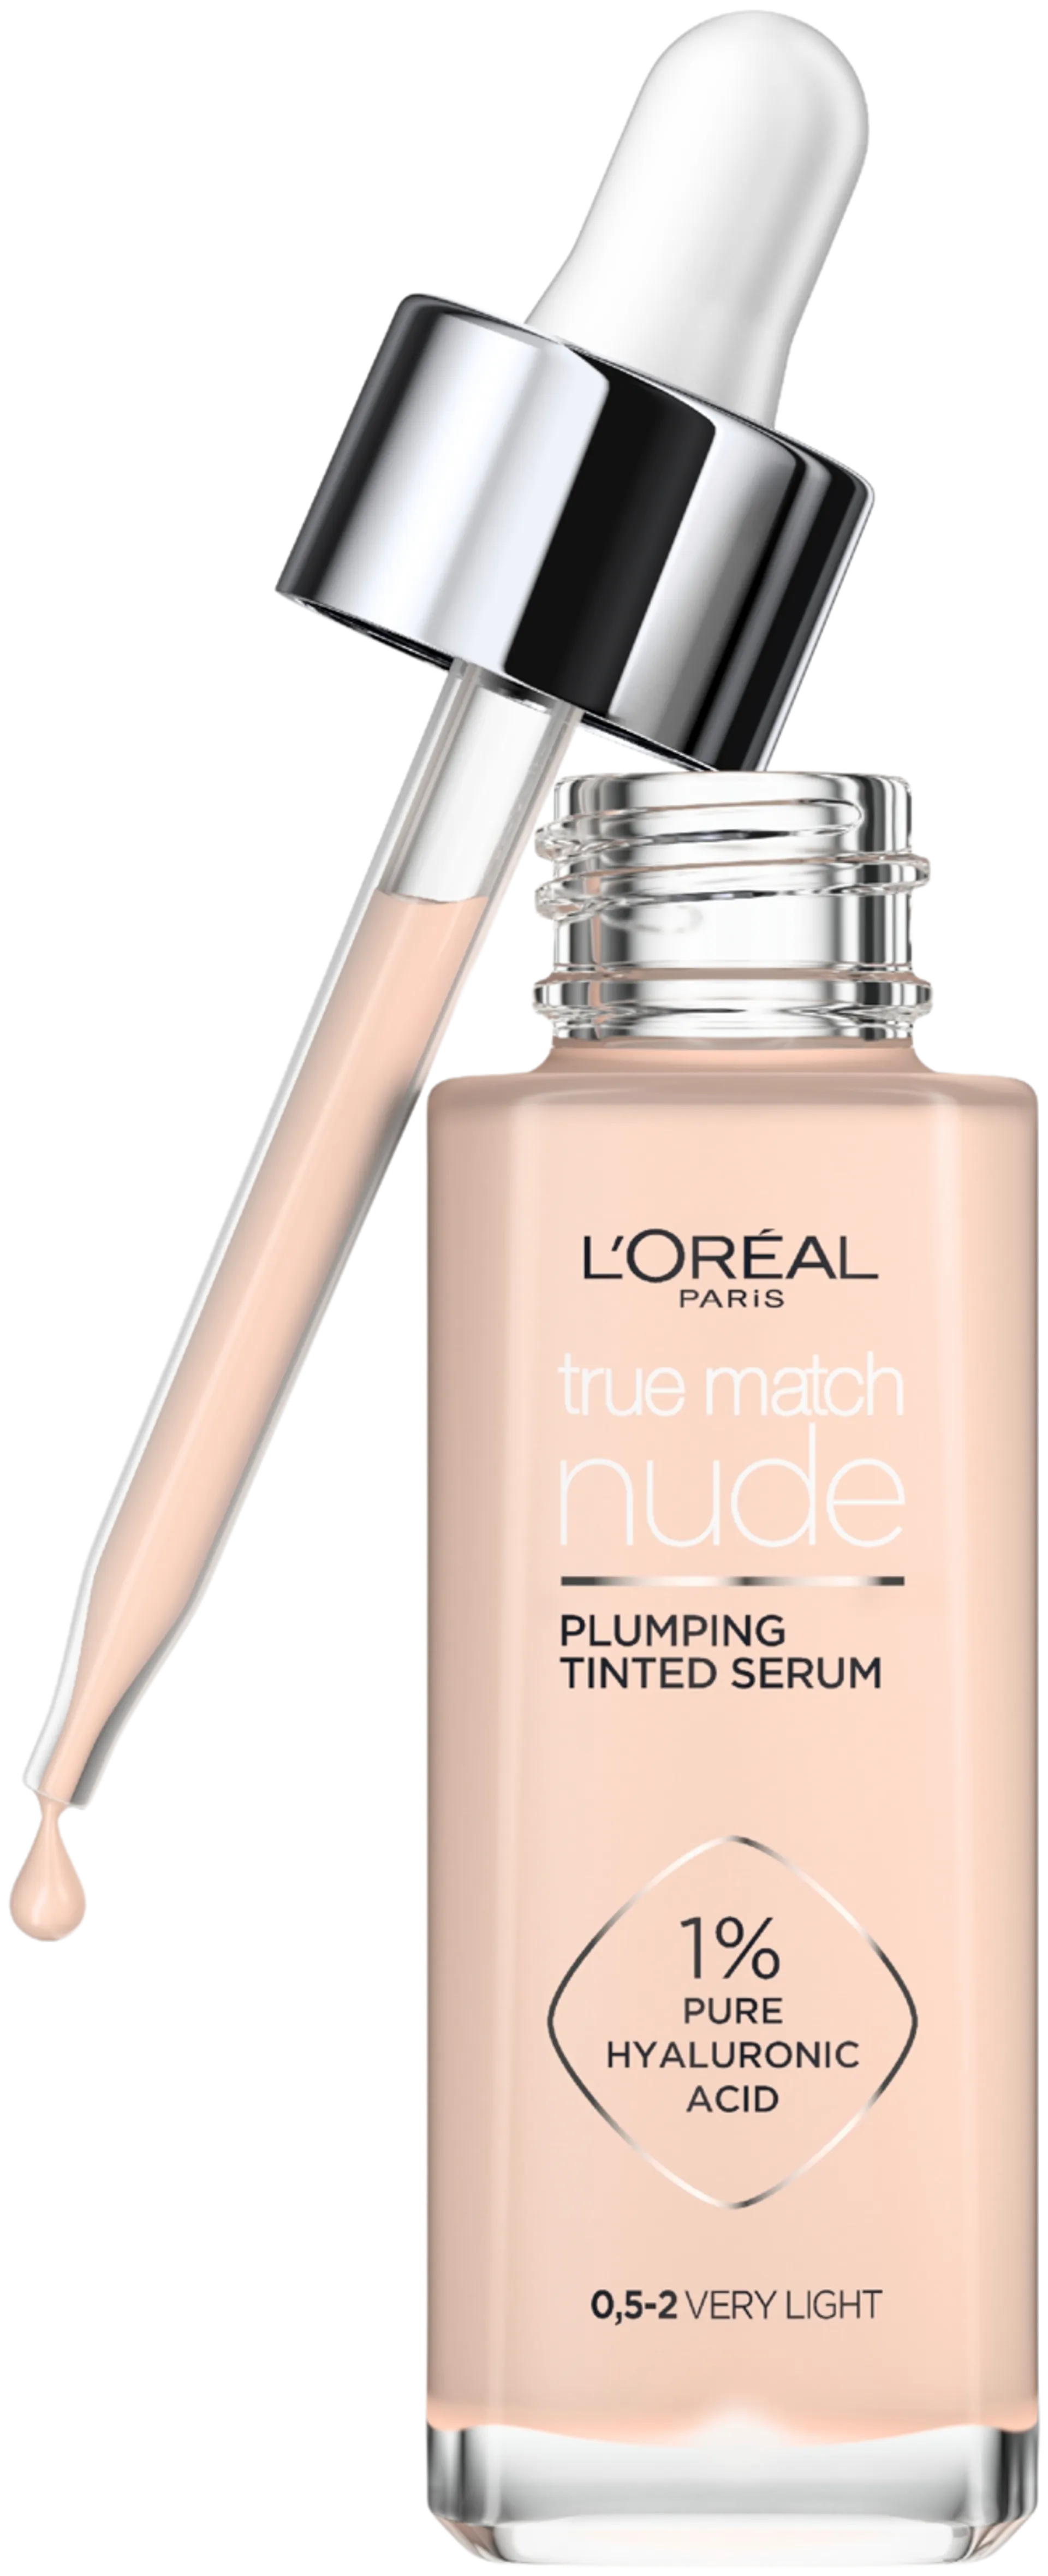 L'Oréal Paris True Match Nude Plumping Tinted Serum meikkivoide 30 ml - 0,5-2 Very Light - 2